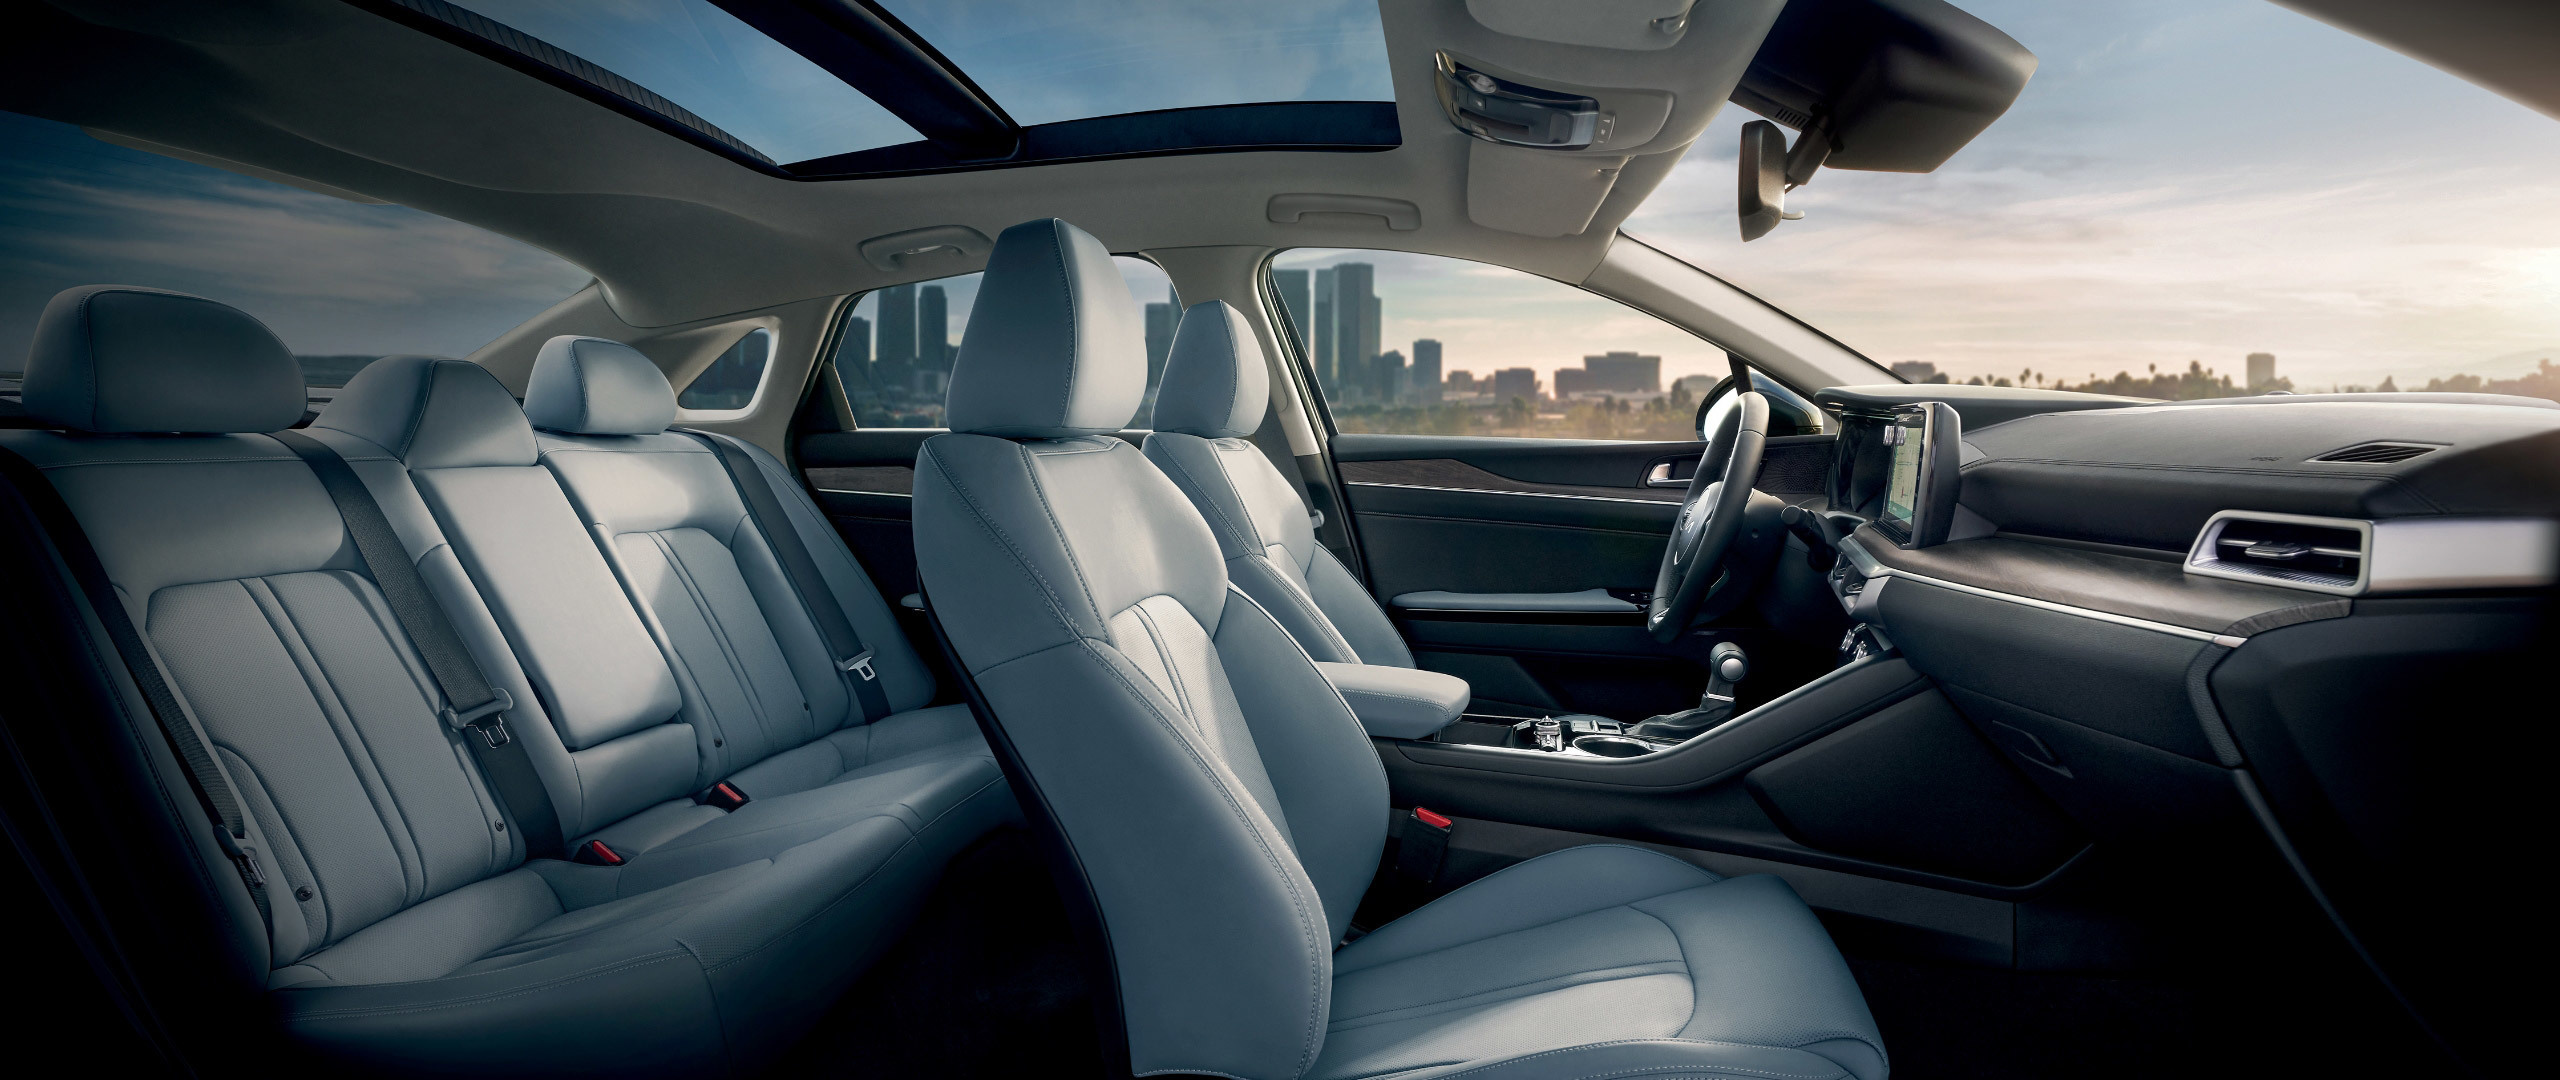 2023 Kia K5 Interior Spacious Seating And Panoramic Sunroof Side View